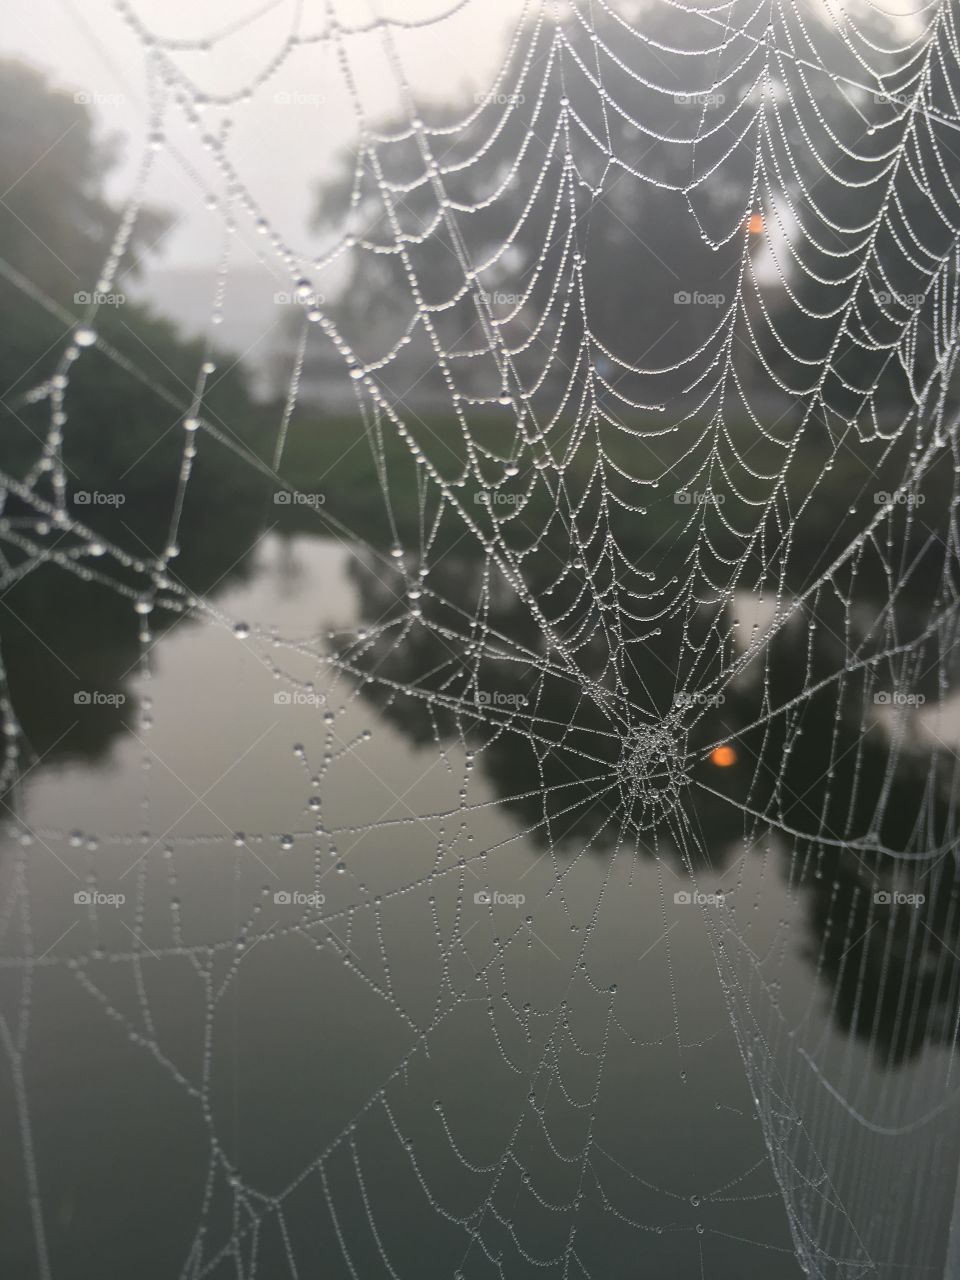 Spider, Spiderweb, Cobweb, Trap, Arachnid